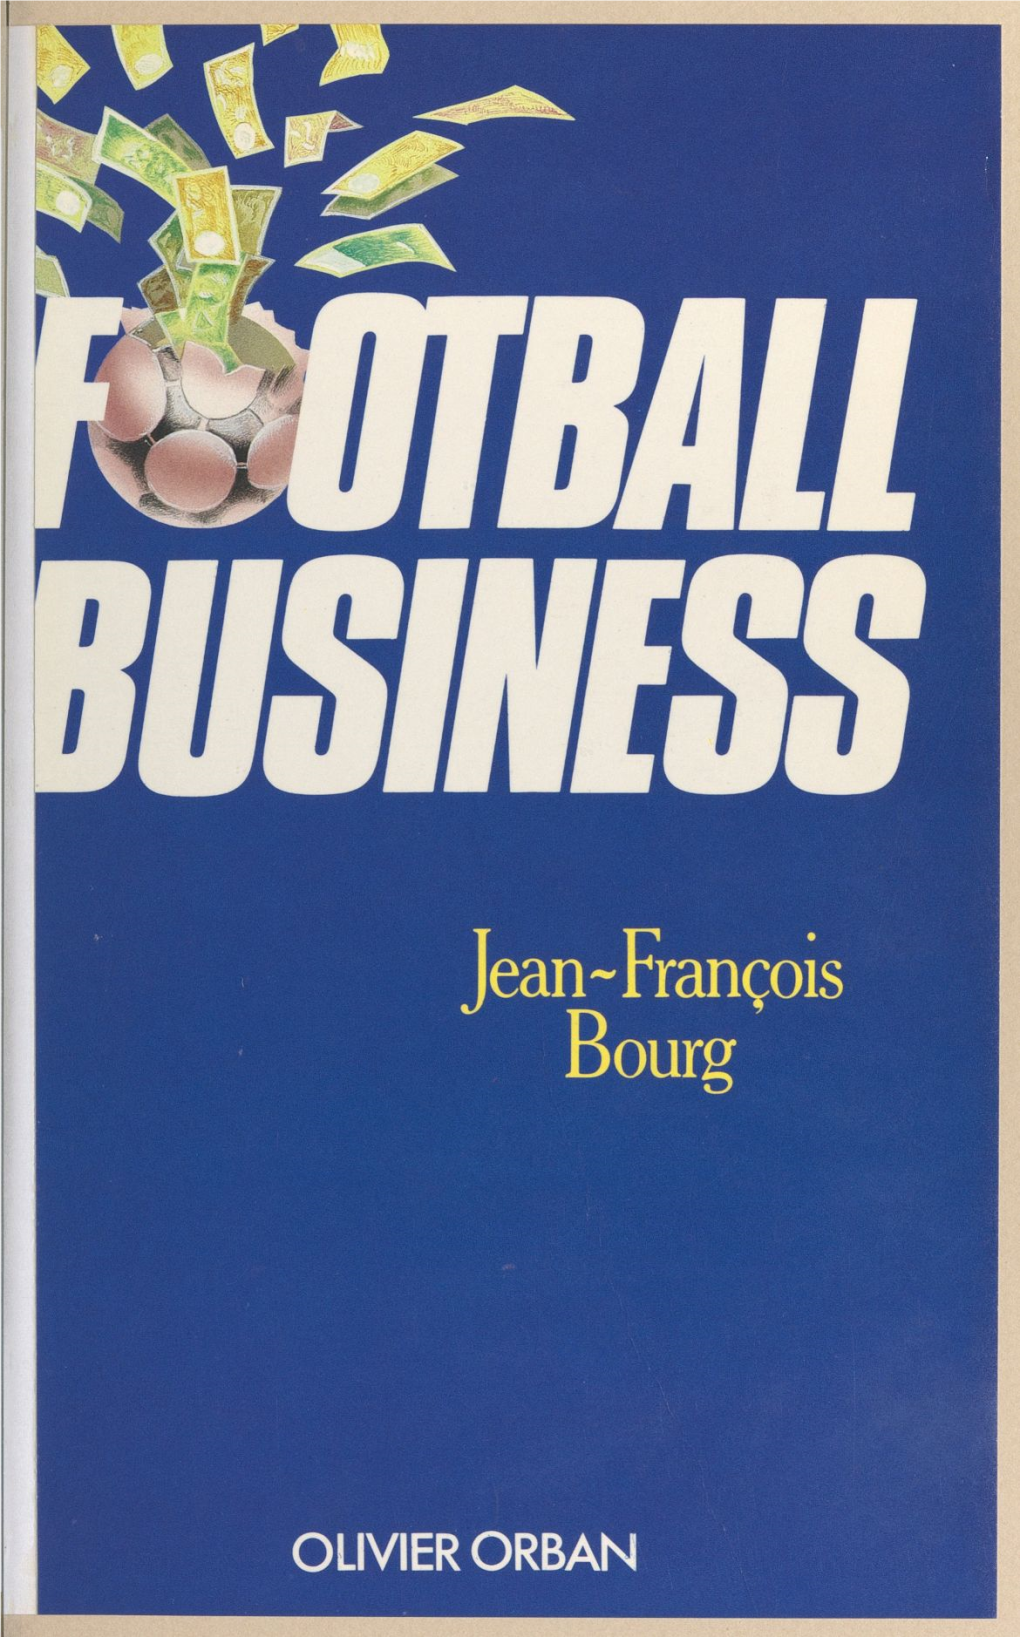 Football Business